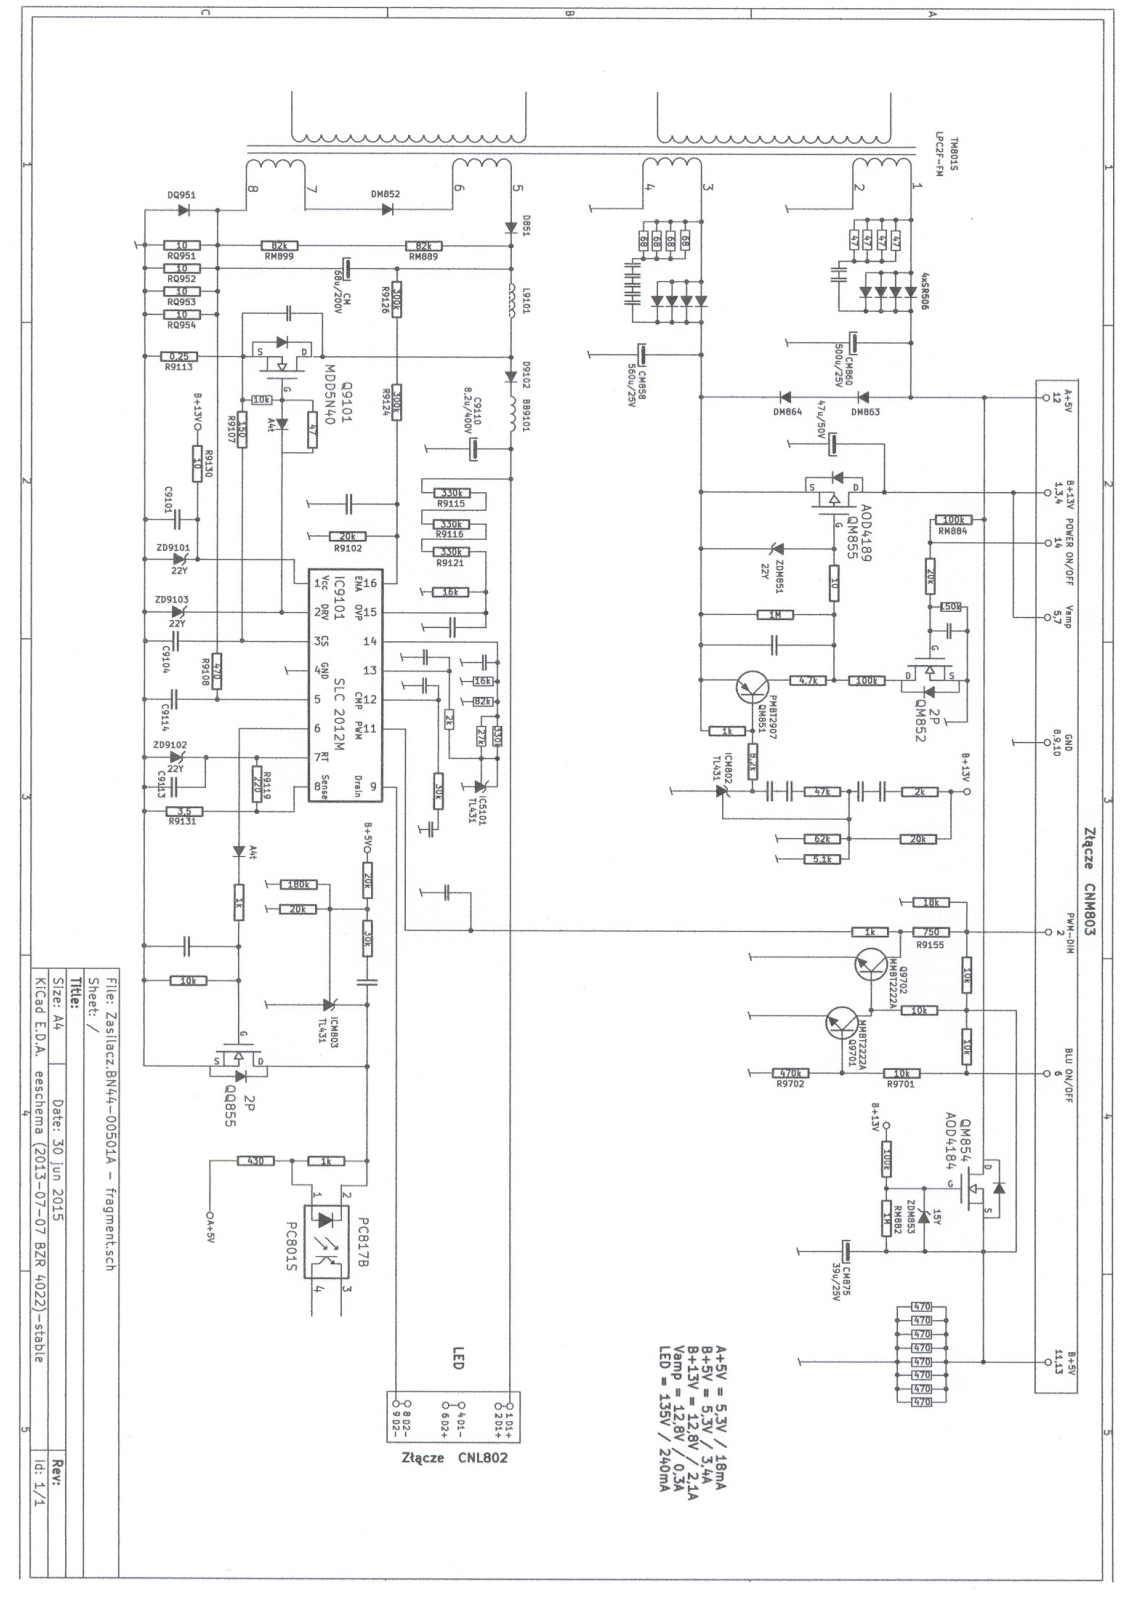 Samsung BN44-00501A SMPS Schematic